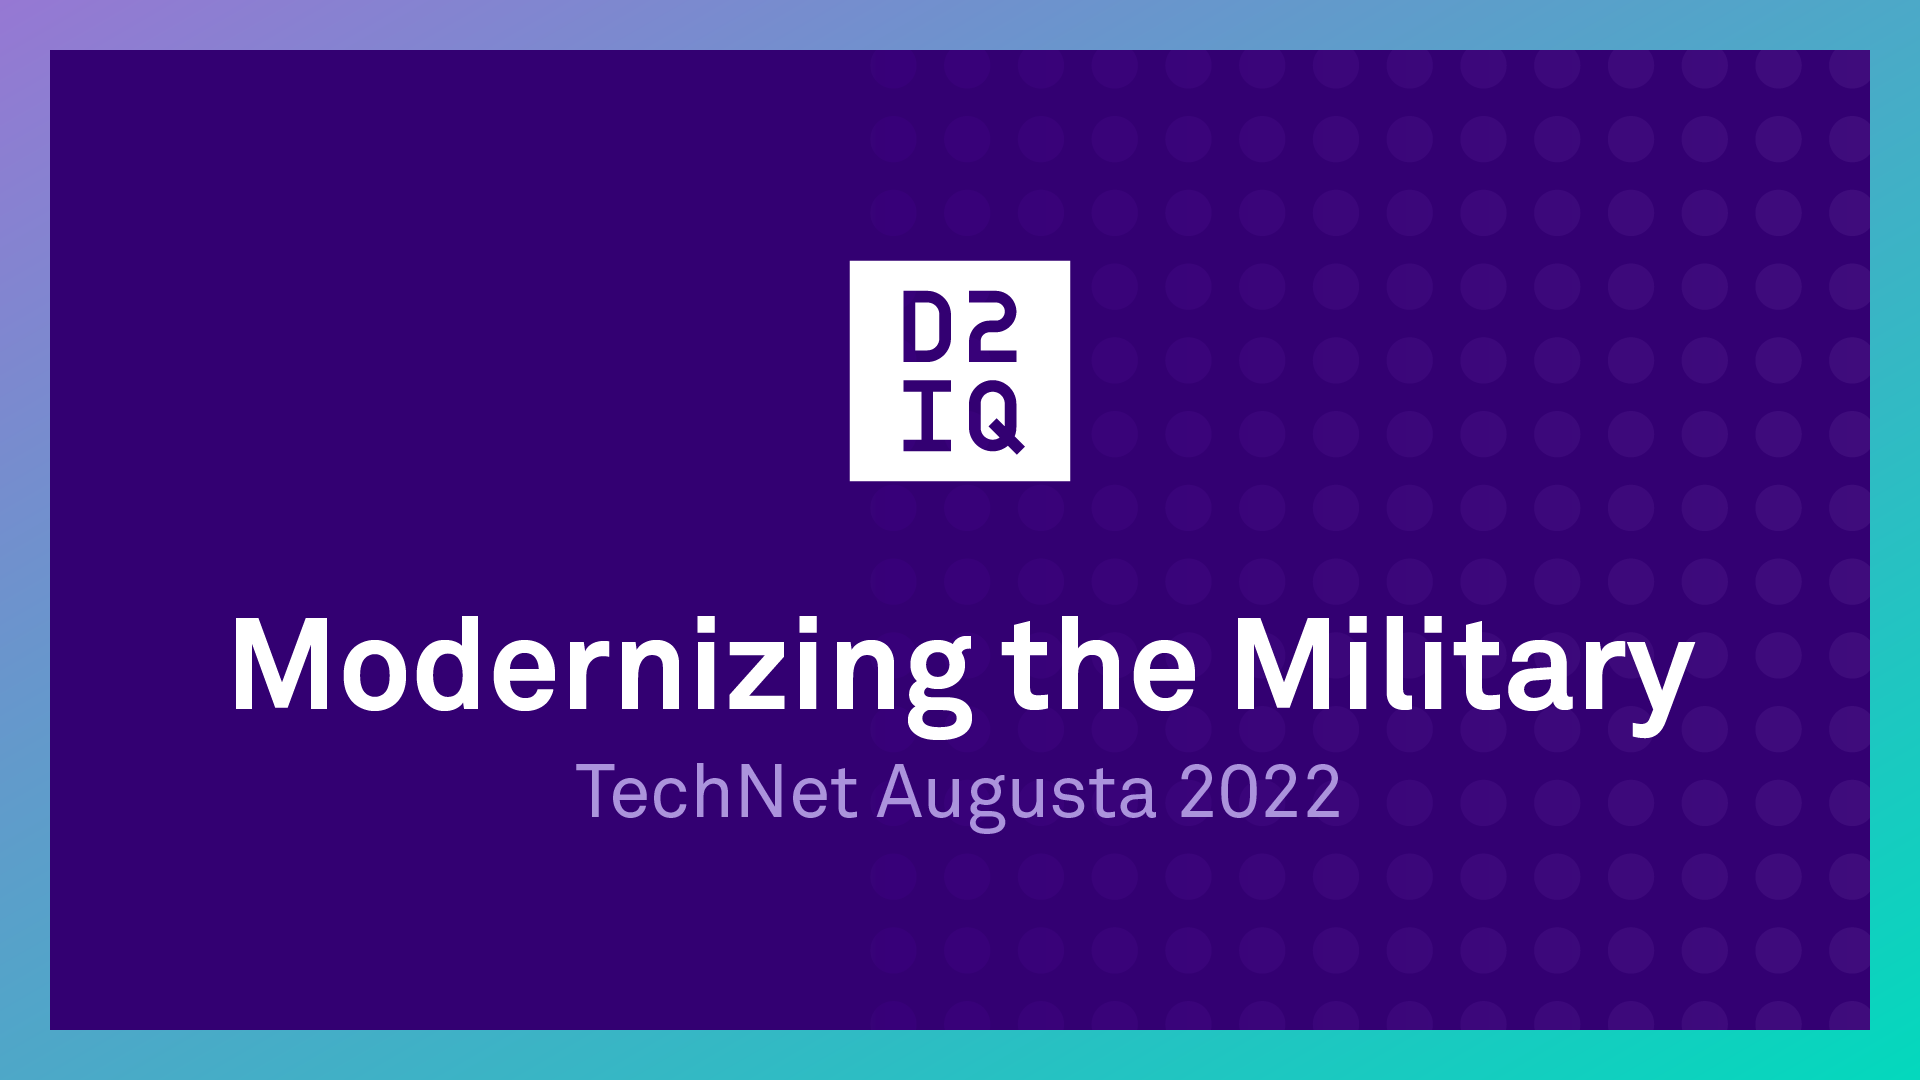 Modernizing the Military: TechNet Augusta 2022